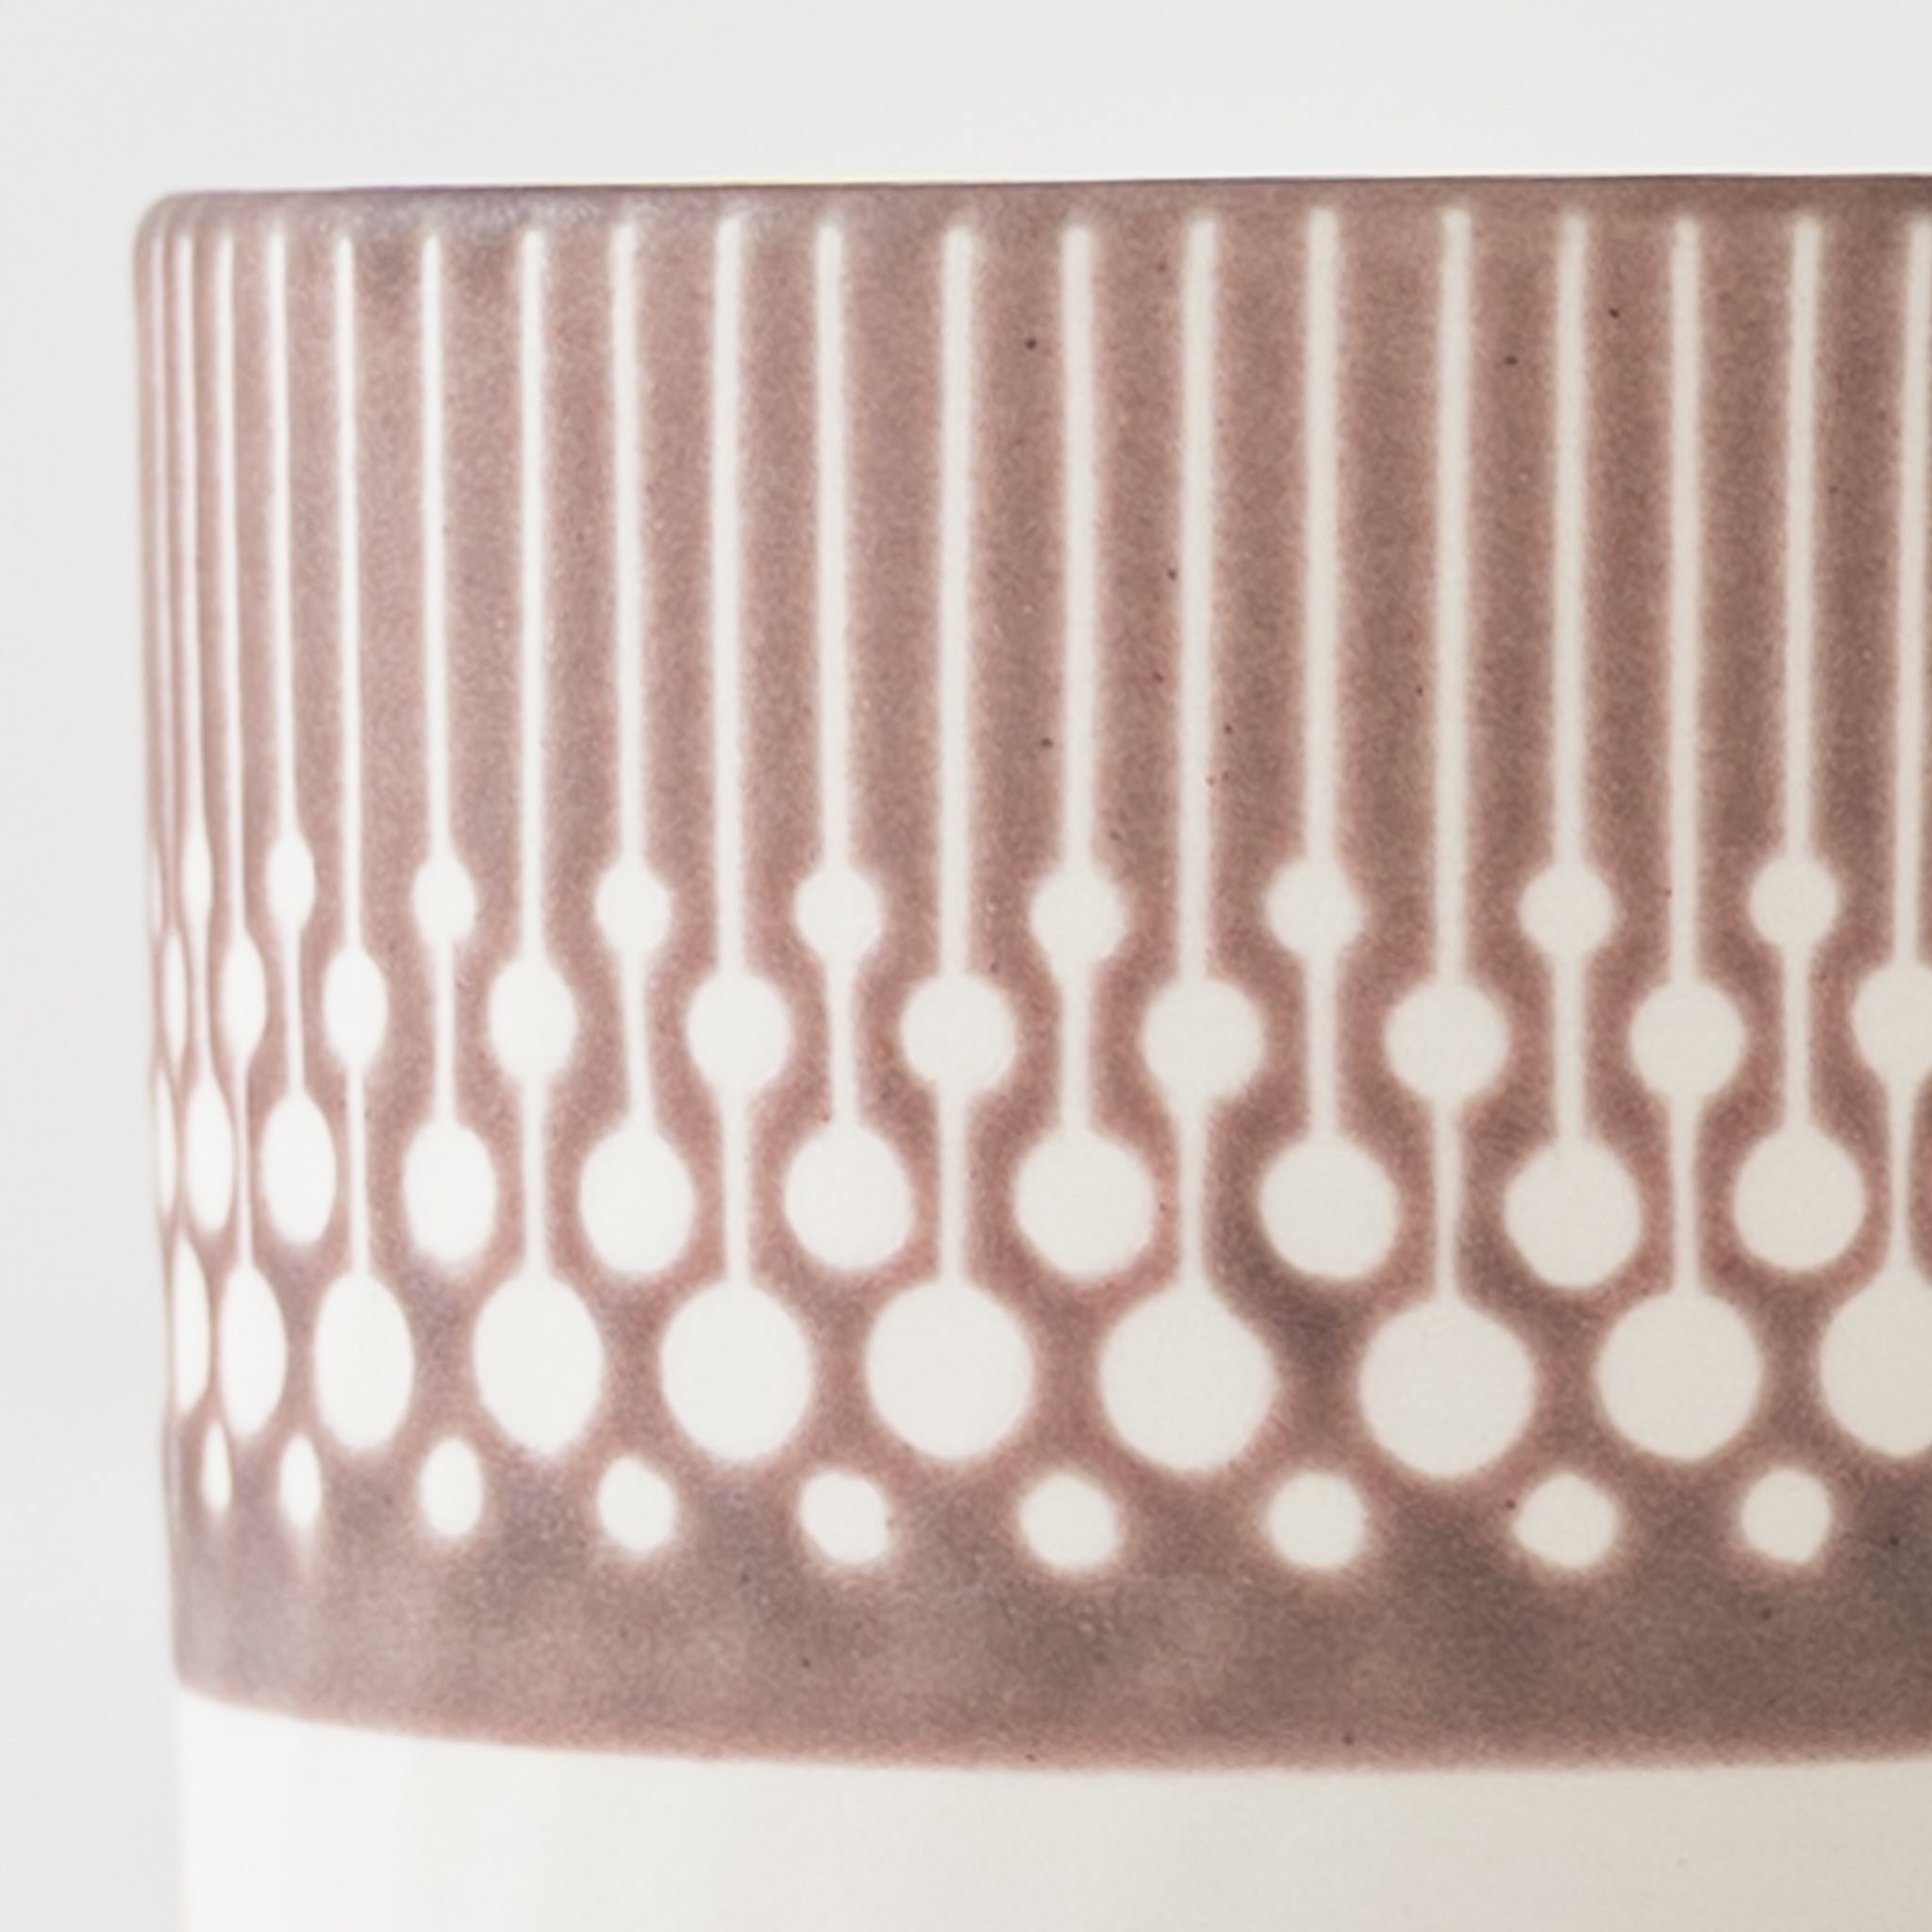 Yukari Nakagawa's mug with nice dot pattern and brown